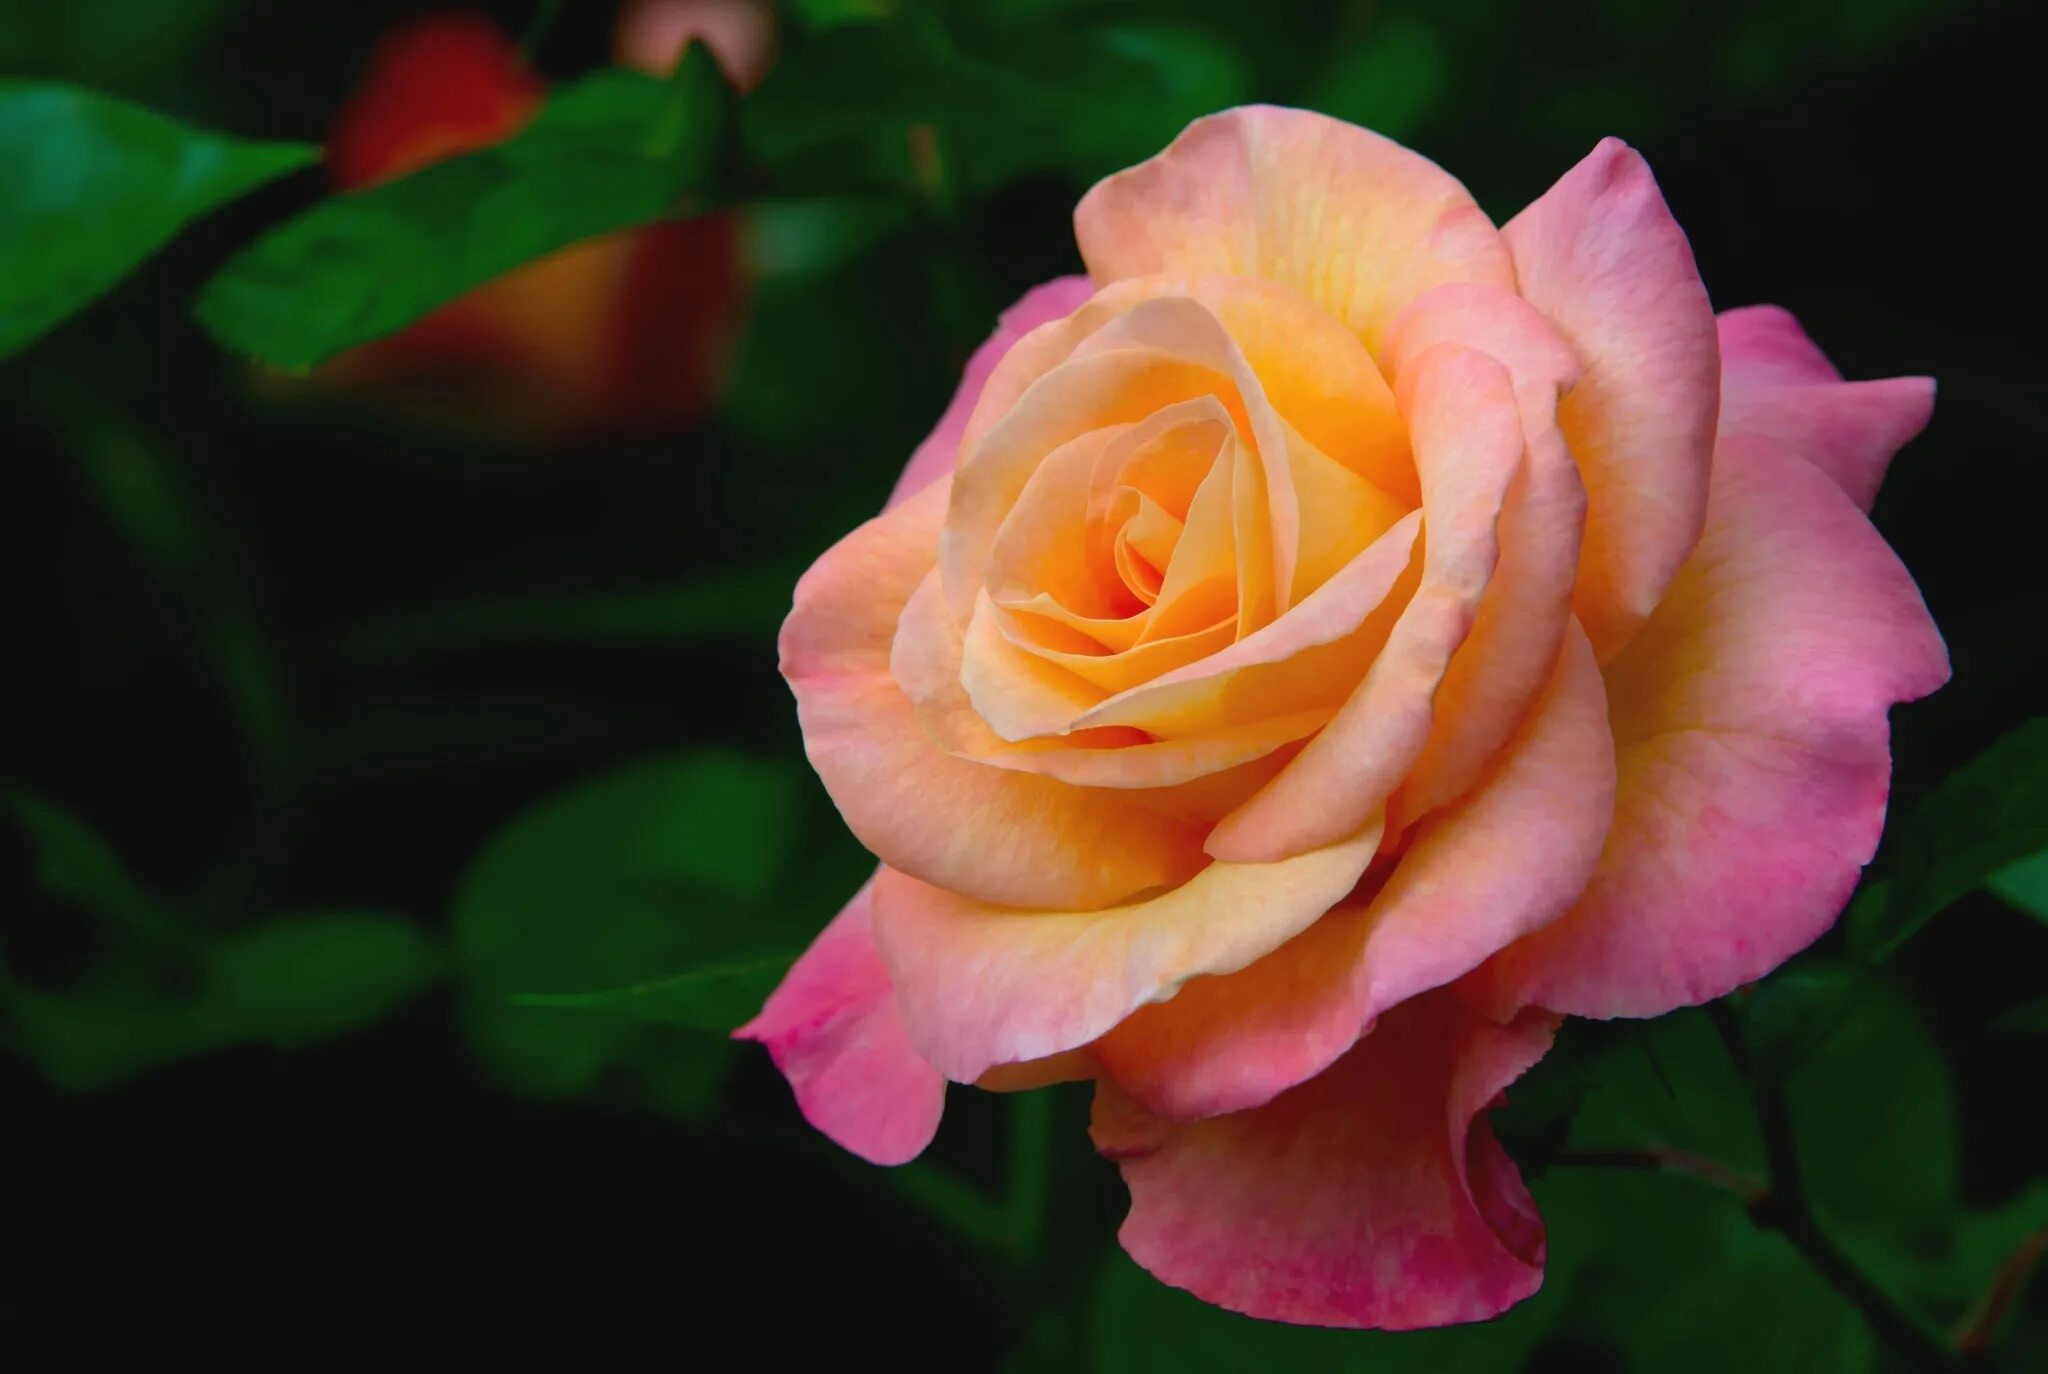 Rose is beautiful. Розы для красавицы.